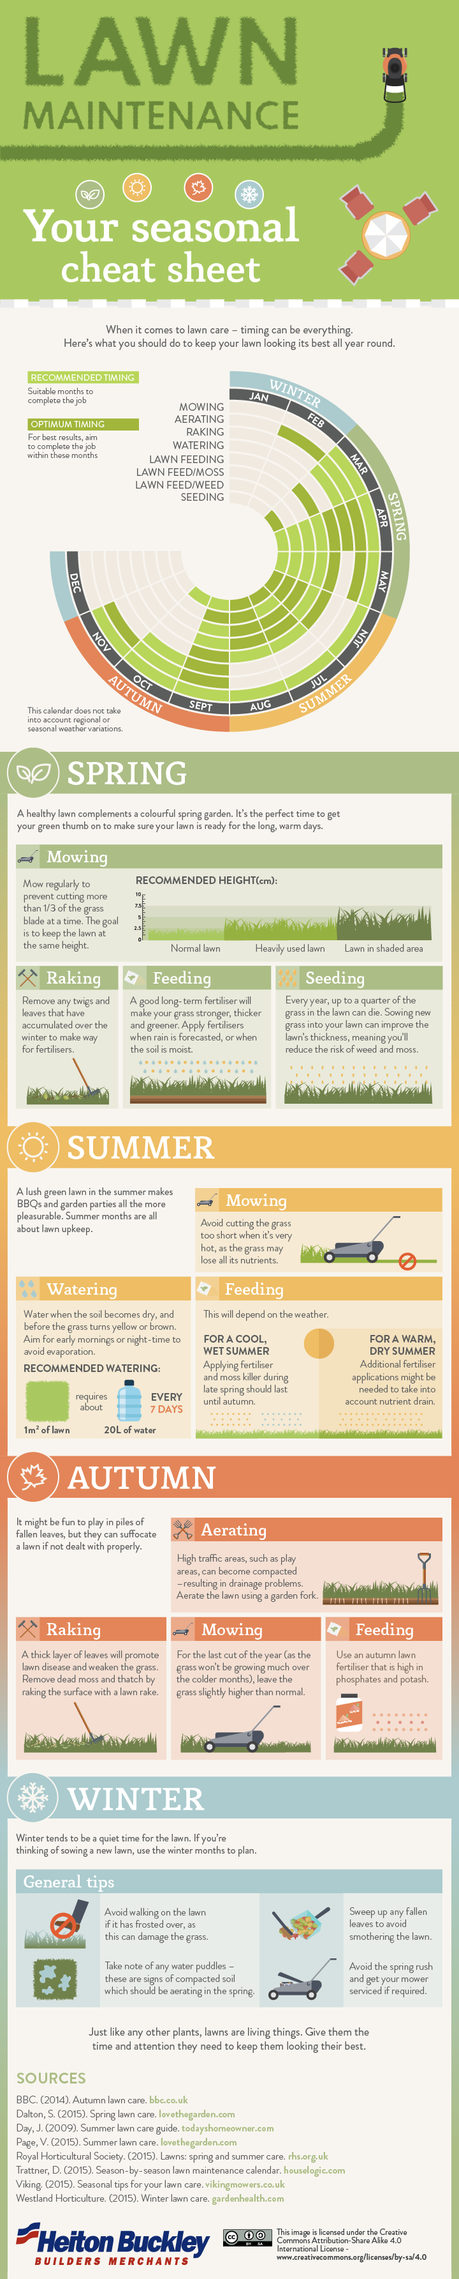 Lawn maintenance cheat sheet infographic